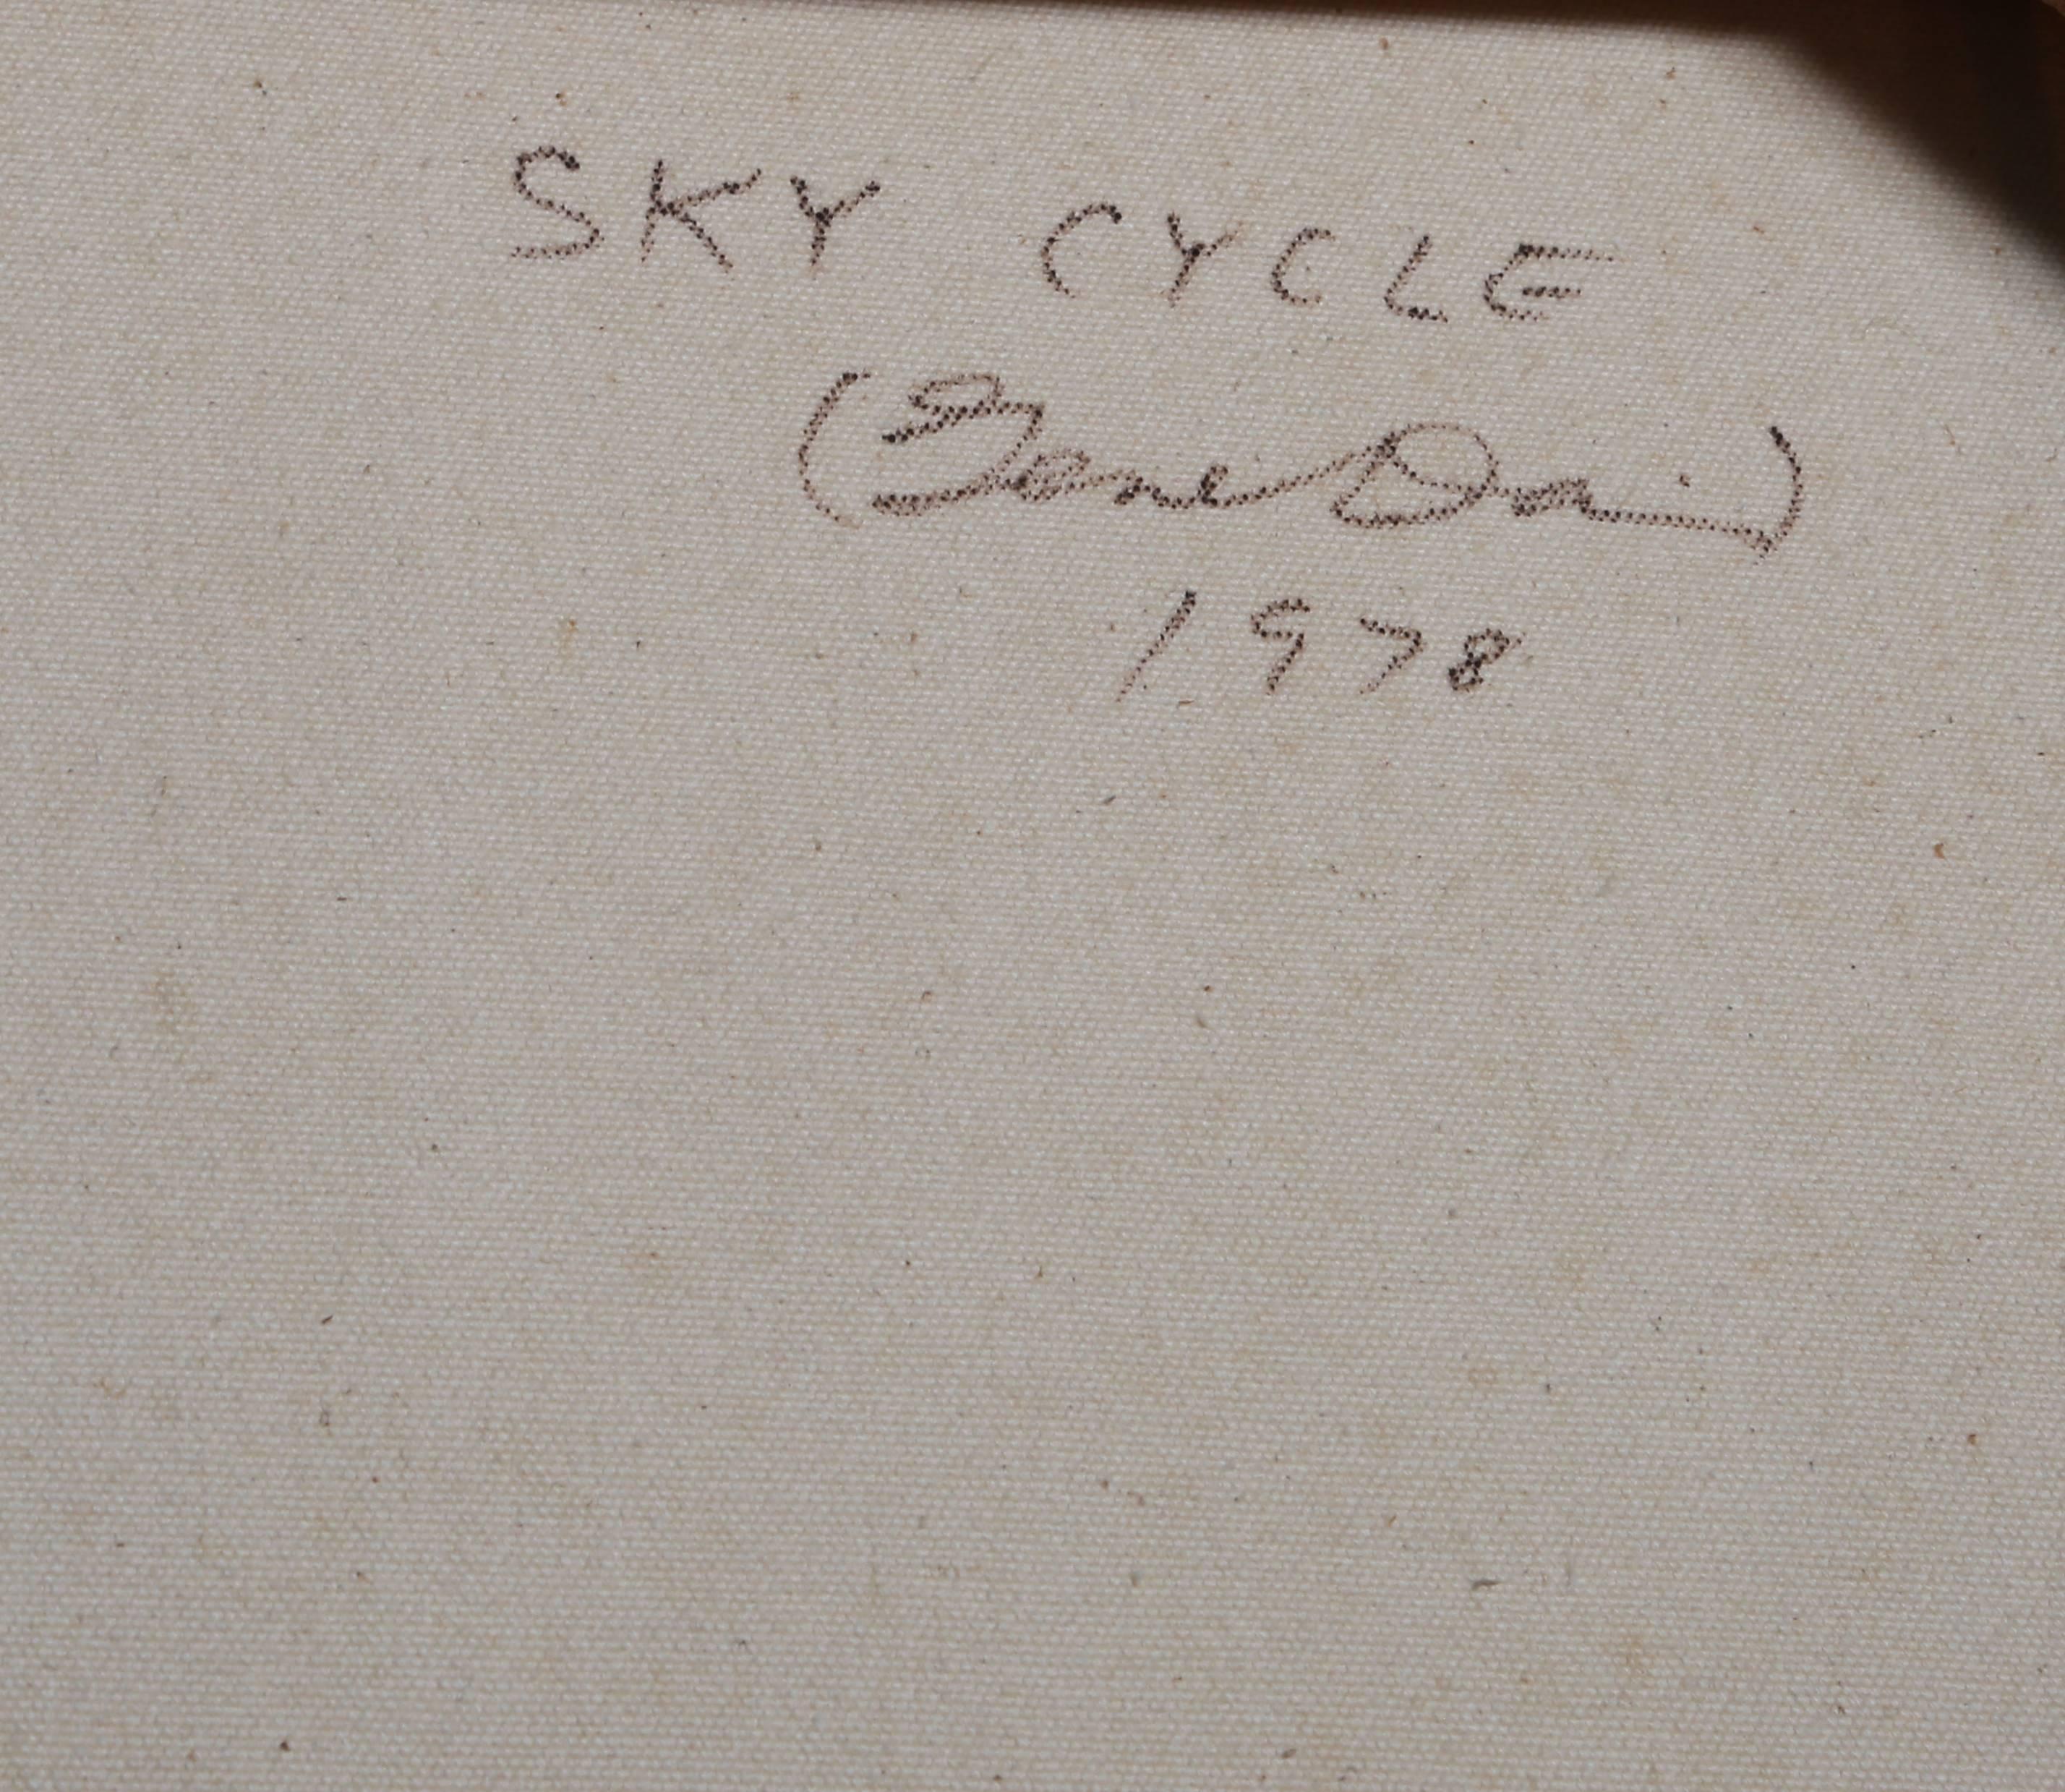 Sky Cycle - Painting by Gene Davis